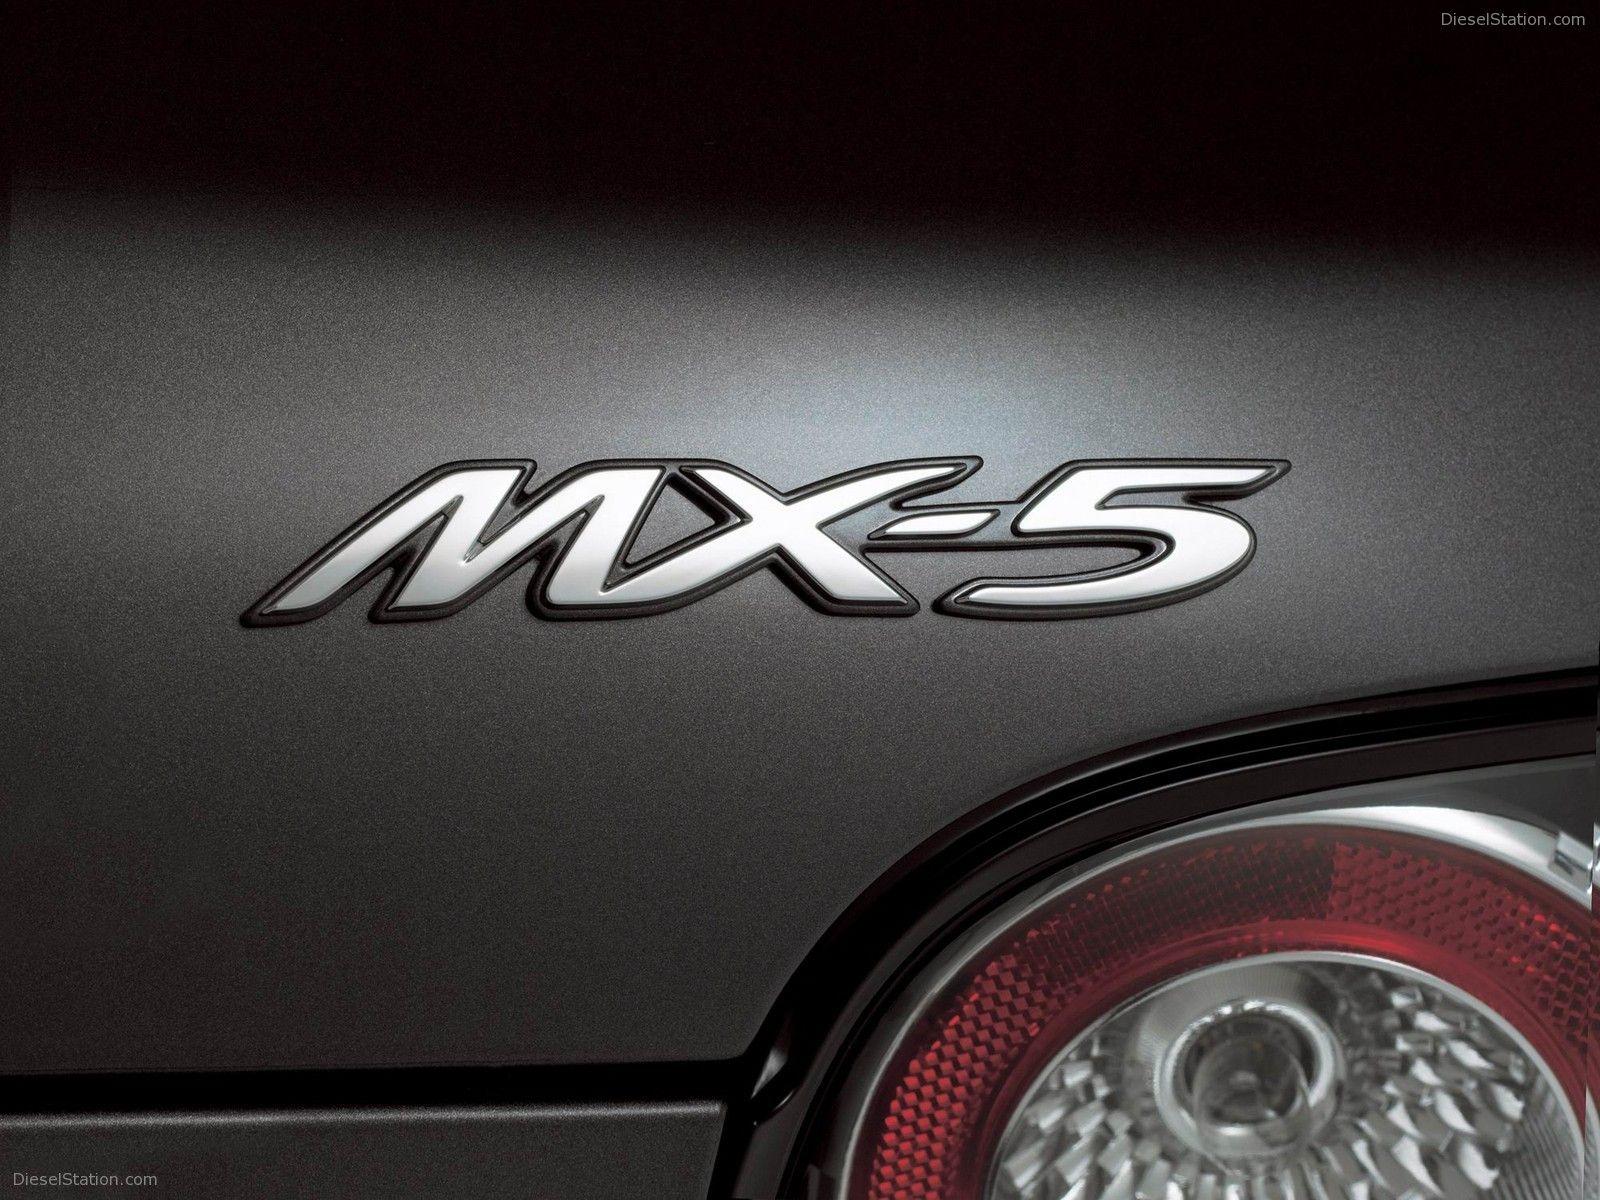 Mazda MX5 (2006) Exotic Car Wallpaper of 27, Diesel Station